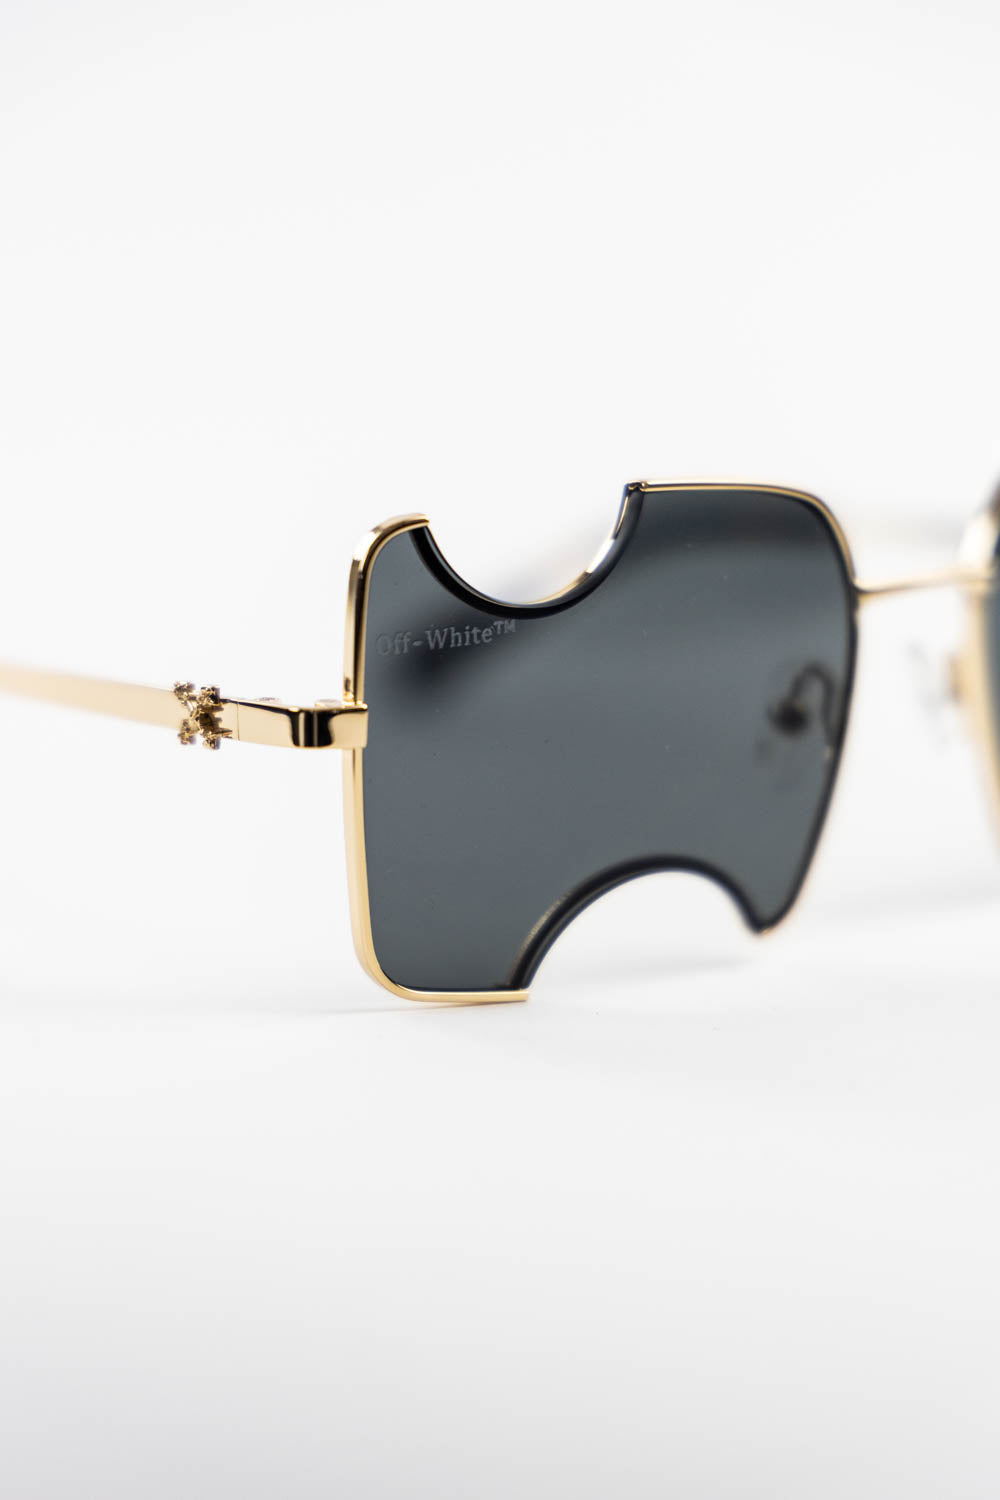 Off-White Cady cut-out rectangular-frame sunglasses Gold / Smog